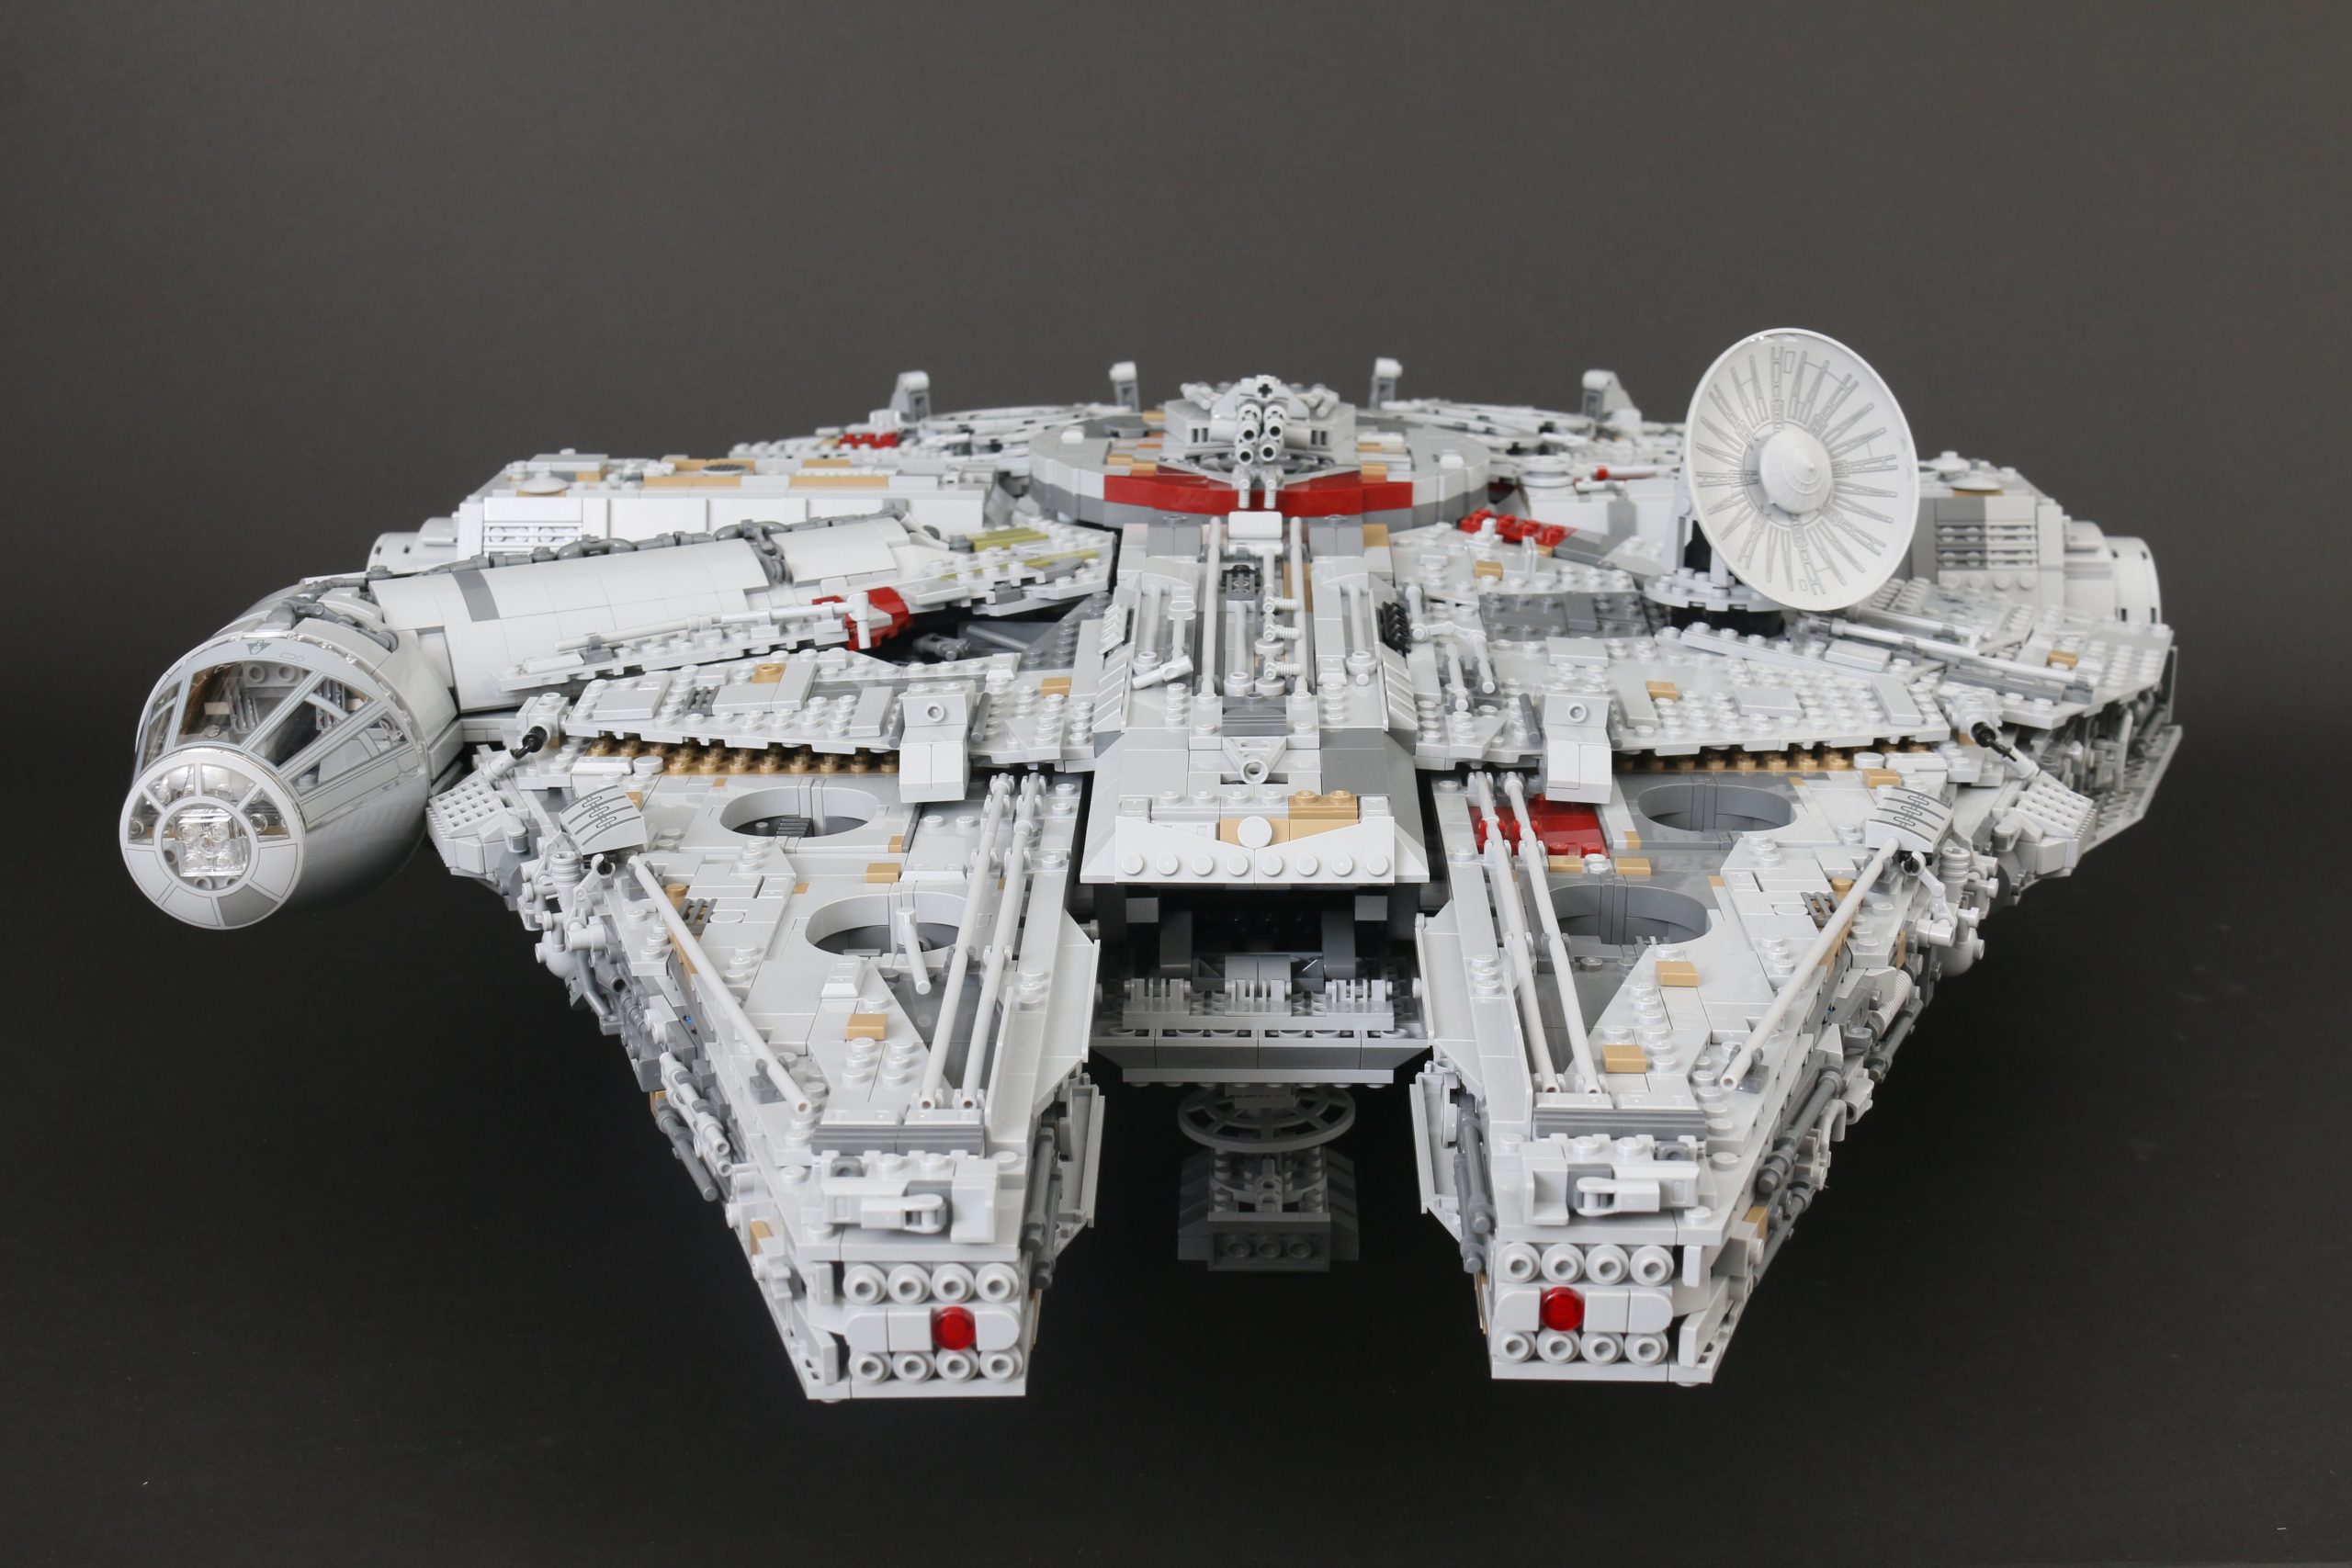 How to improve LEGO Star Wars 75192 Millennium Falcon